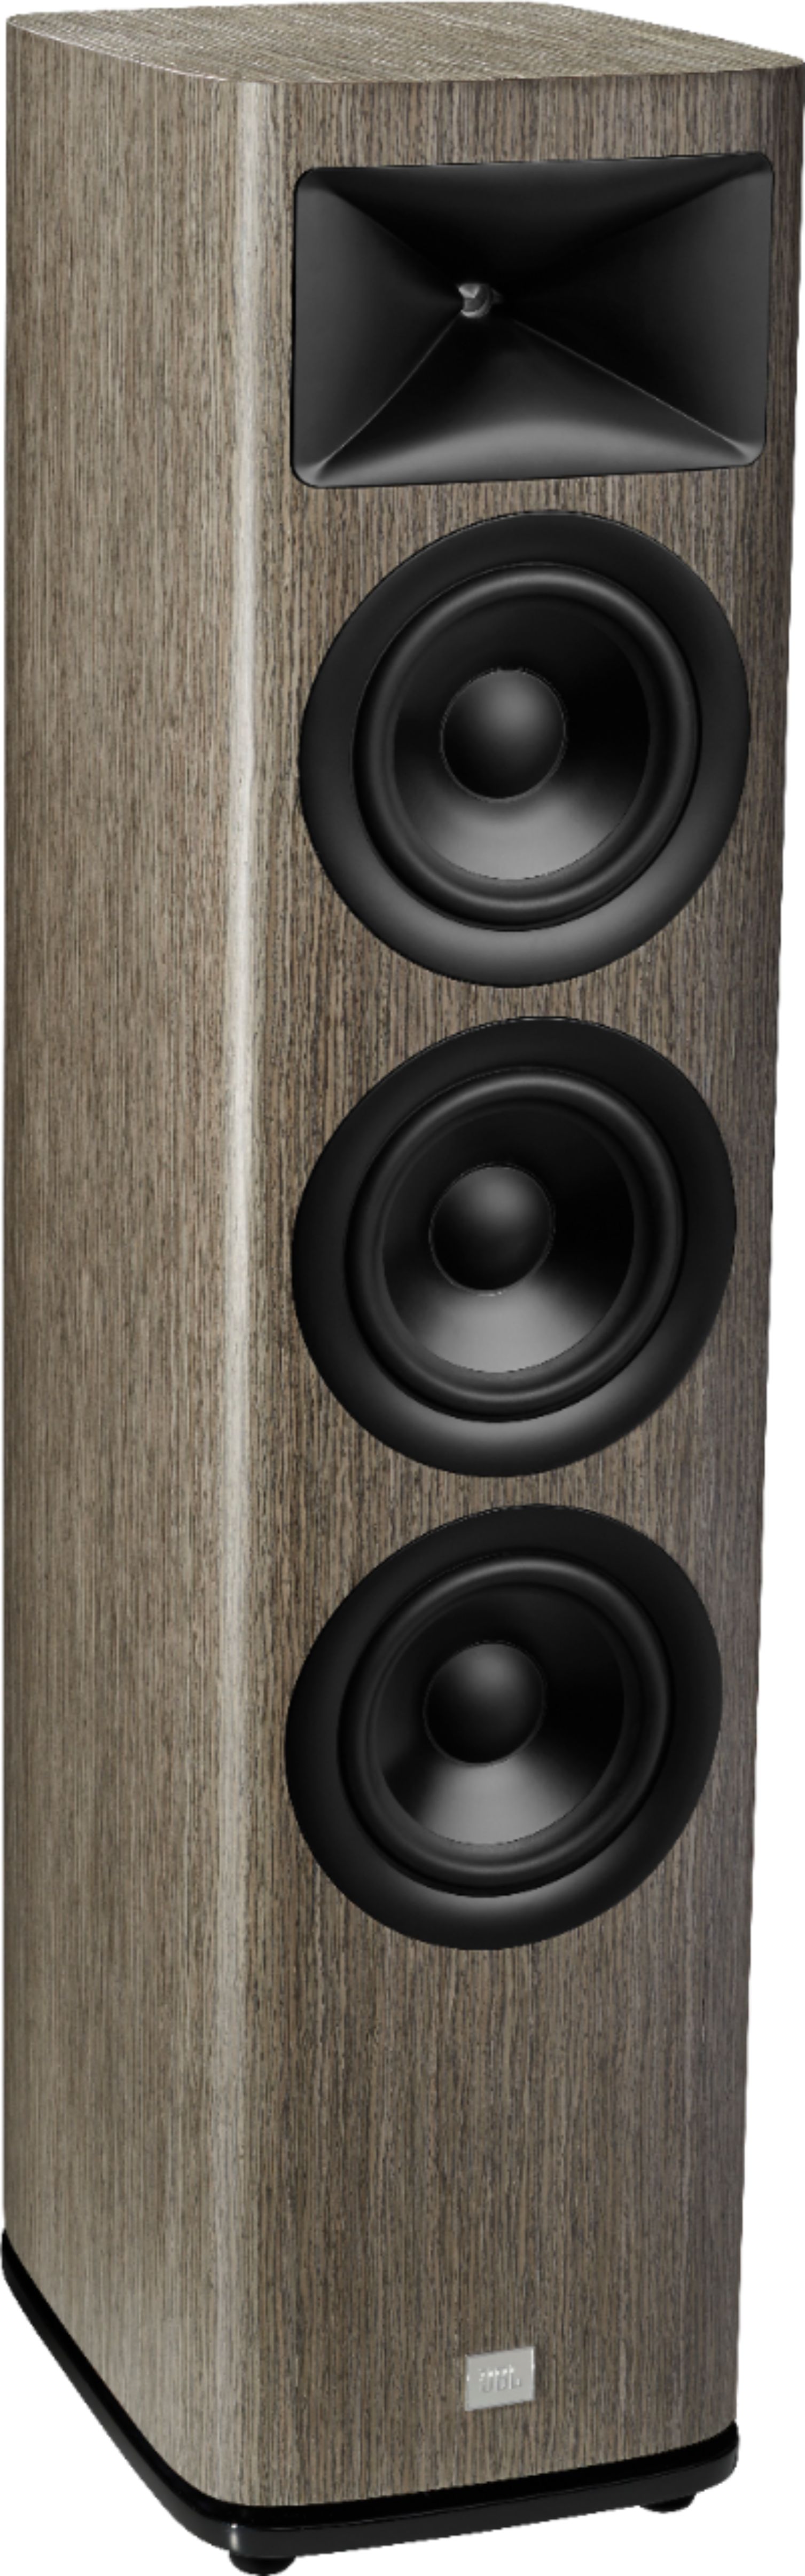 Left View: JBL - HDI3600 Triple 6.5-inch 2-1/2 way Floorstanding Loudspeaker with 1" compression tweeter - Gray Oak Finish